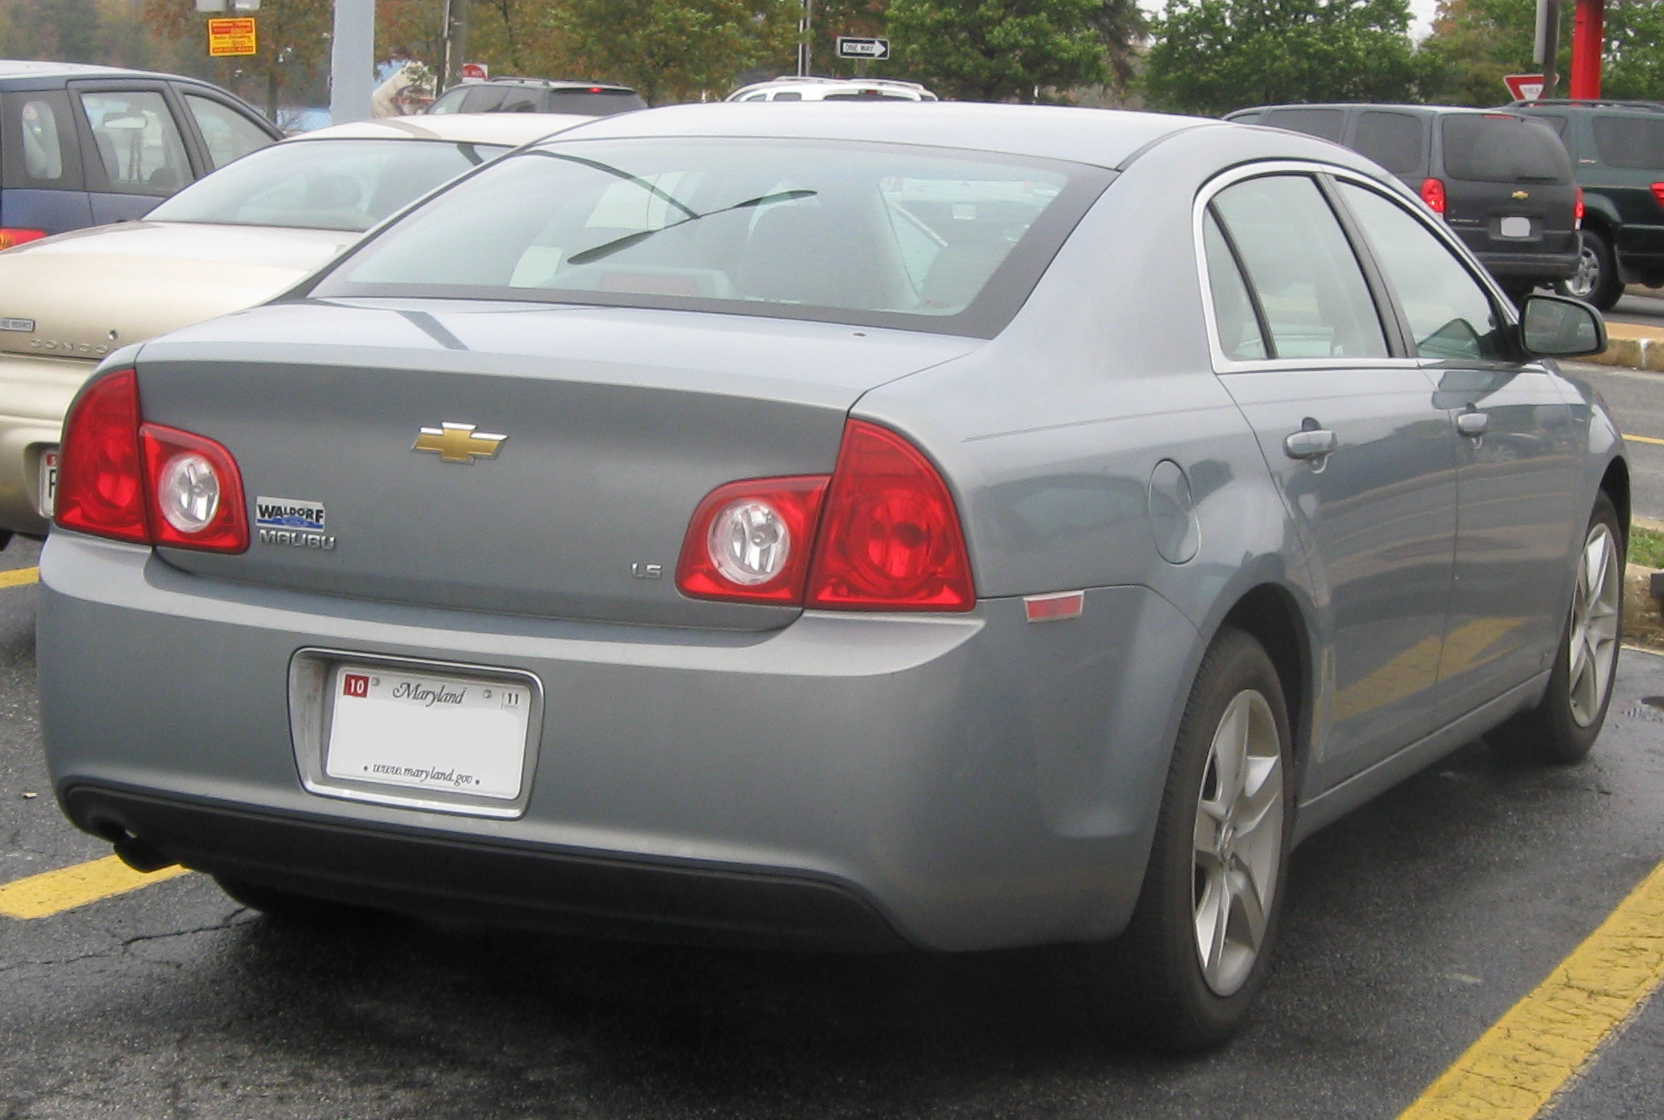 File:Chevrolet Malibu LS rear -- 10-31-2009.jpg - Wikimedia Commons